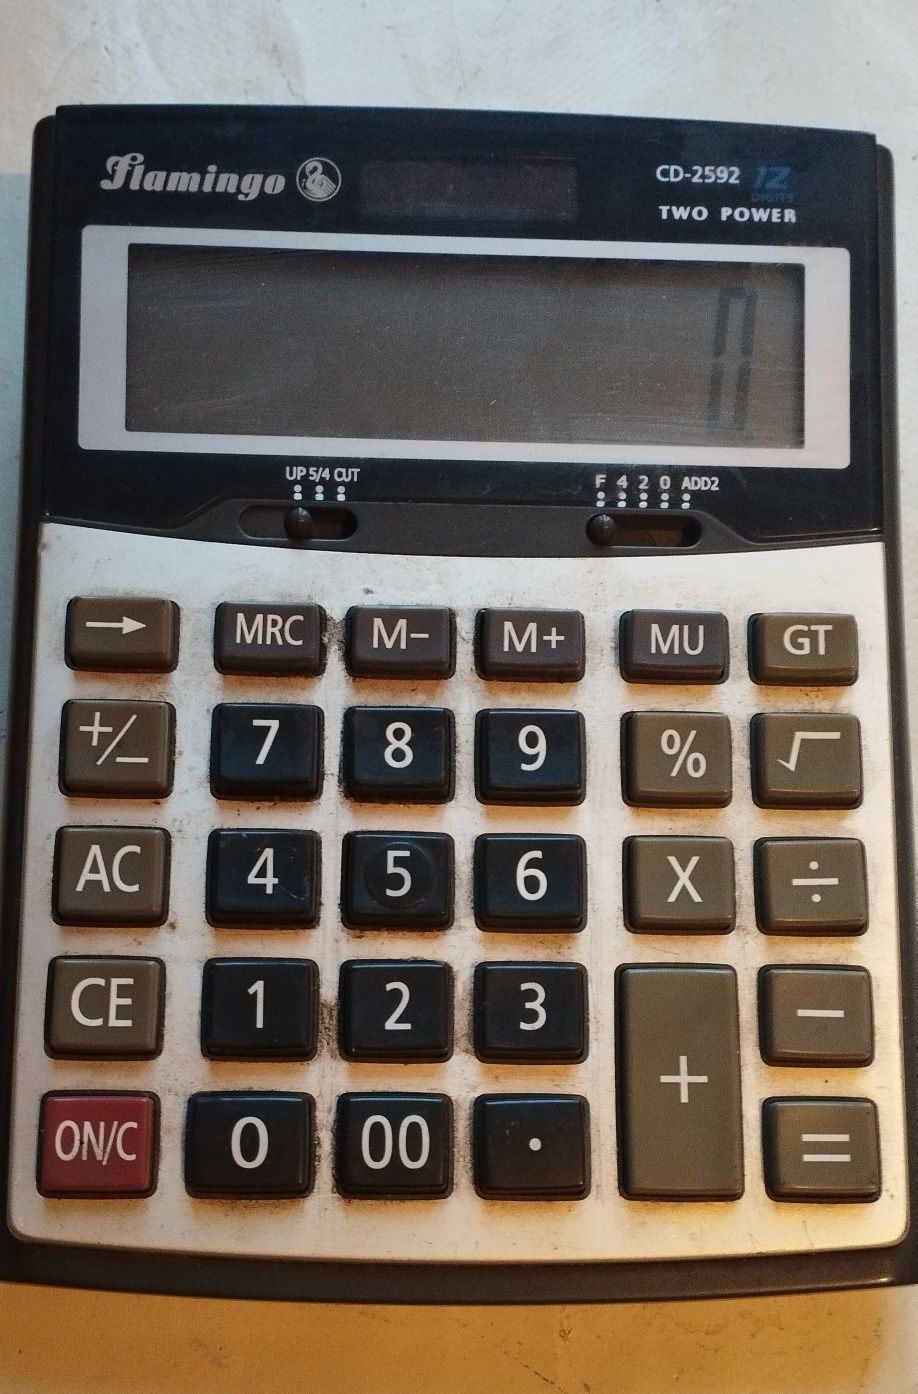 Продам калькуляторы